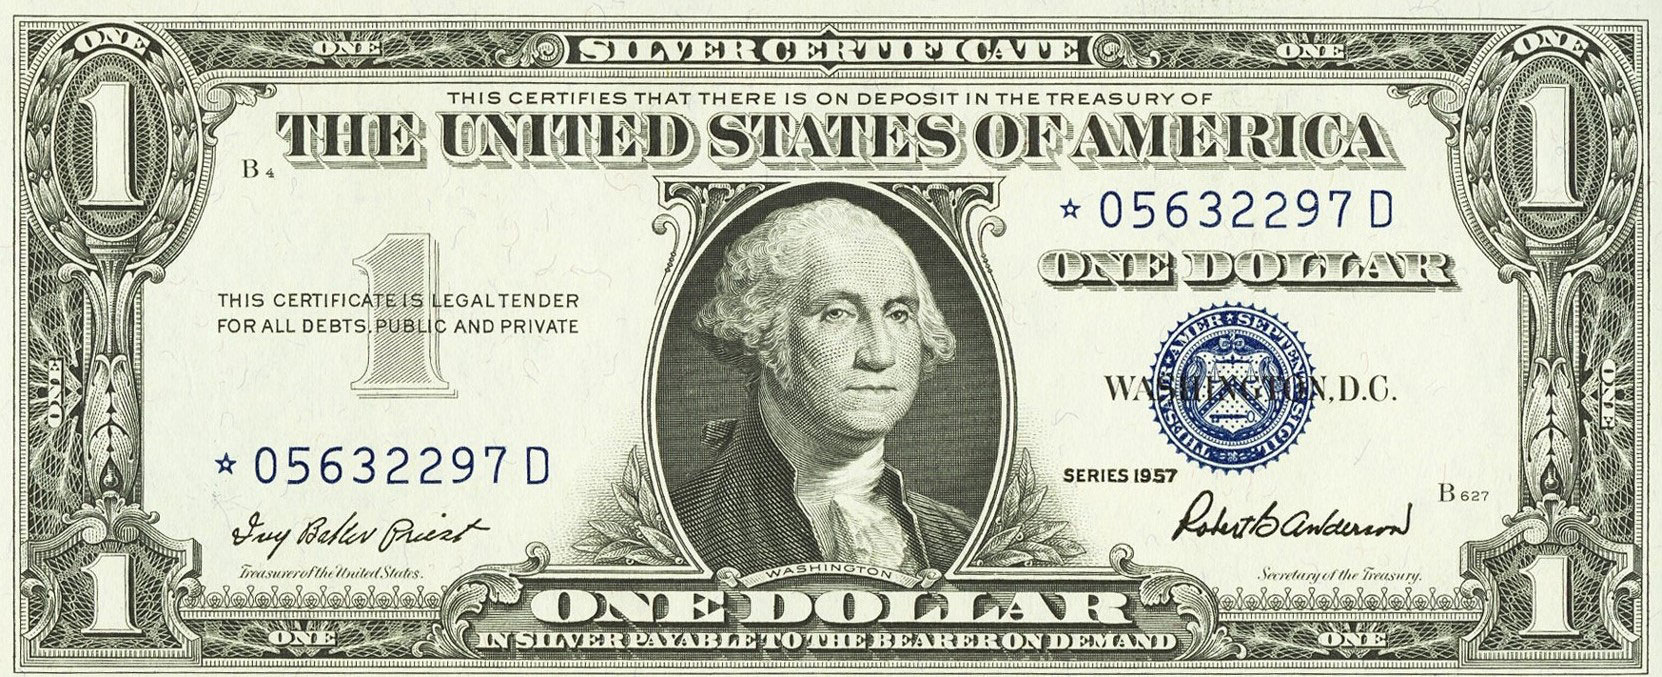 Lot of 25 Silver Certificate Dollar Bills Great for Flea Markets FREE P/H! 